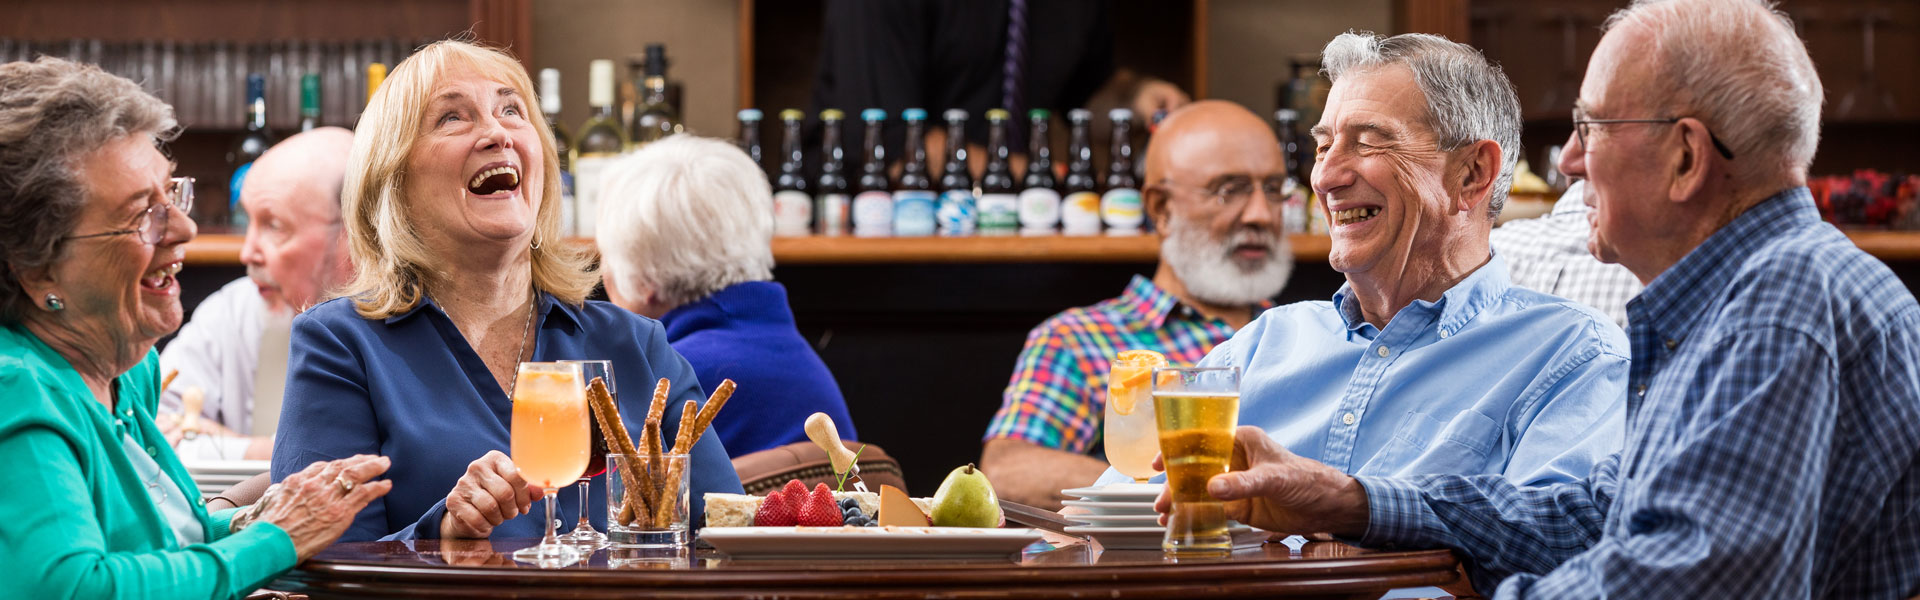 Group of seniors drinking at pub